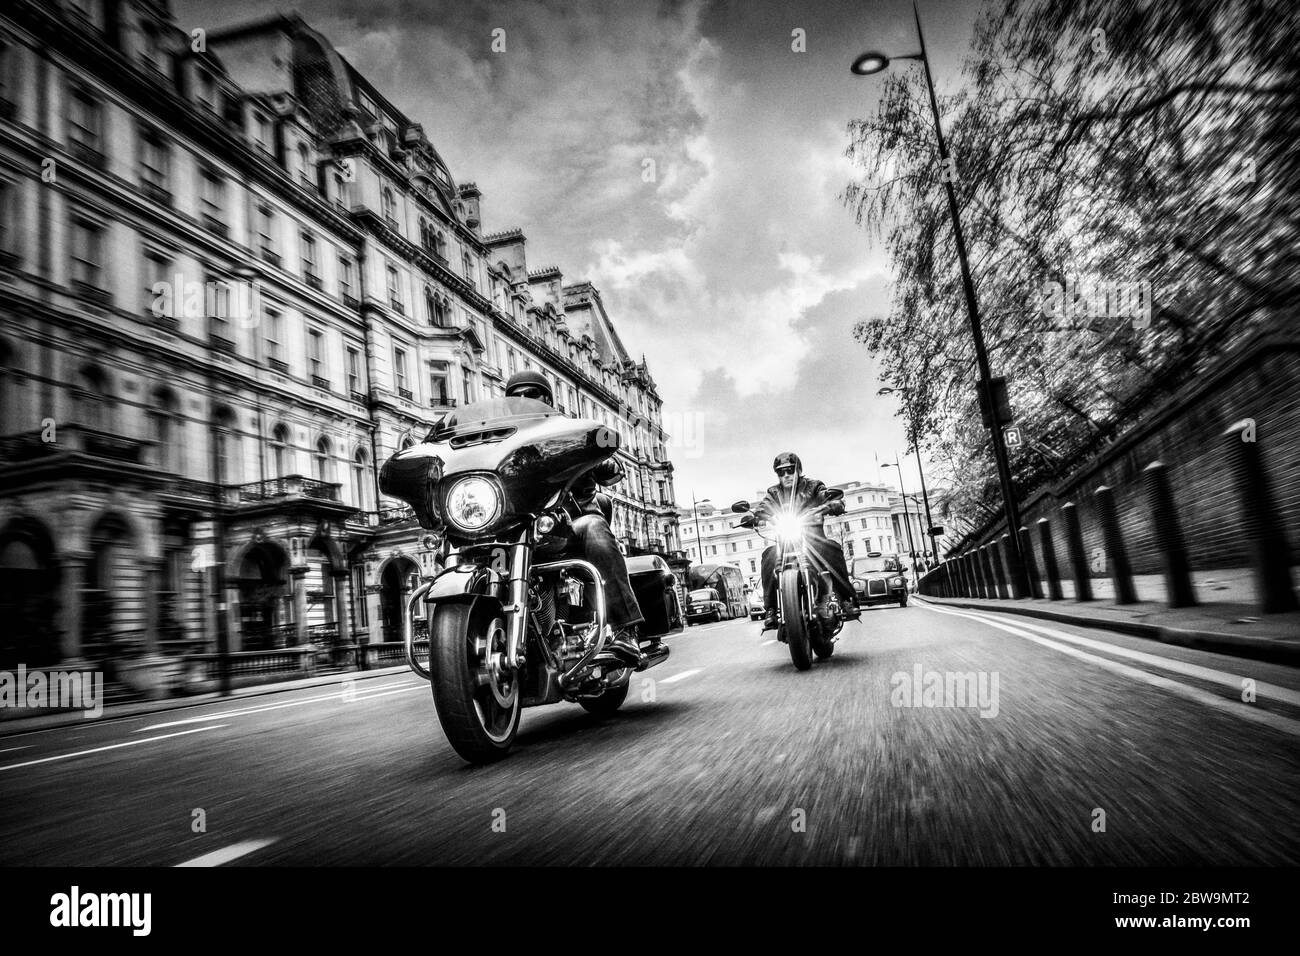 United Kingdom, London, Motorcyclists on city street Stock Photo